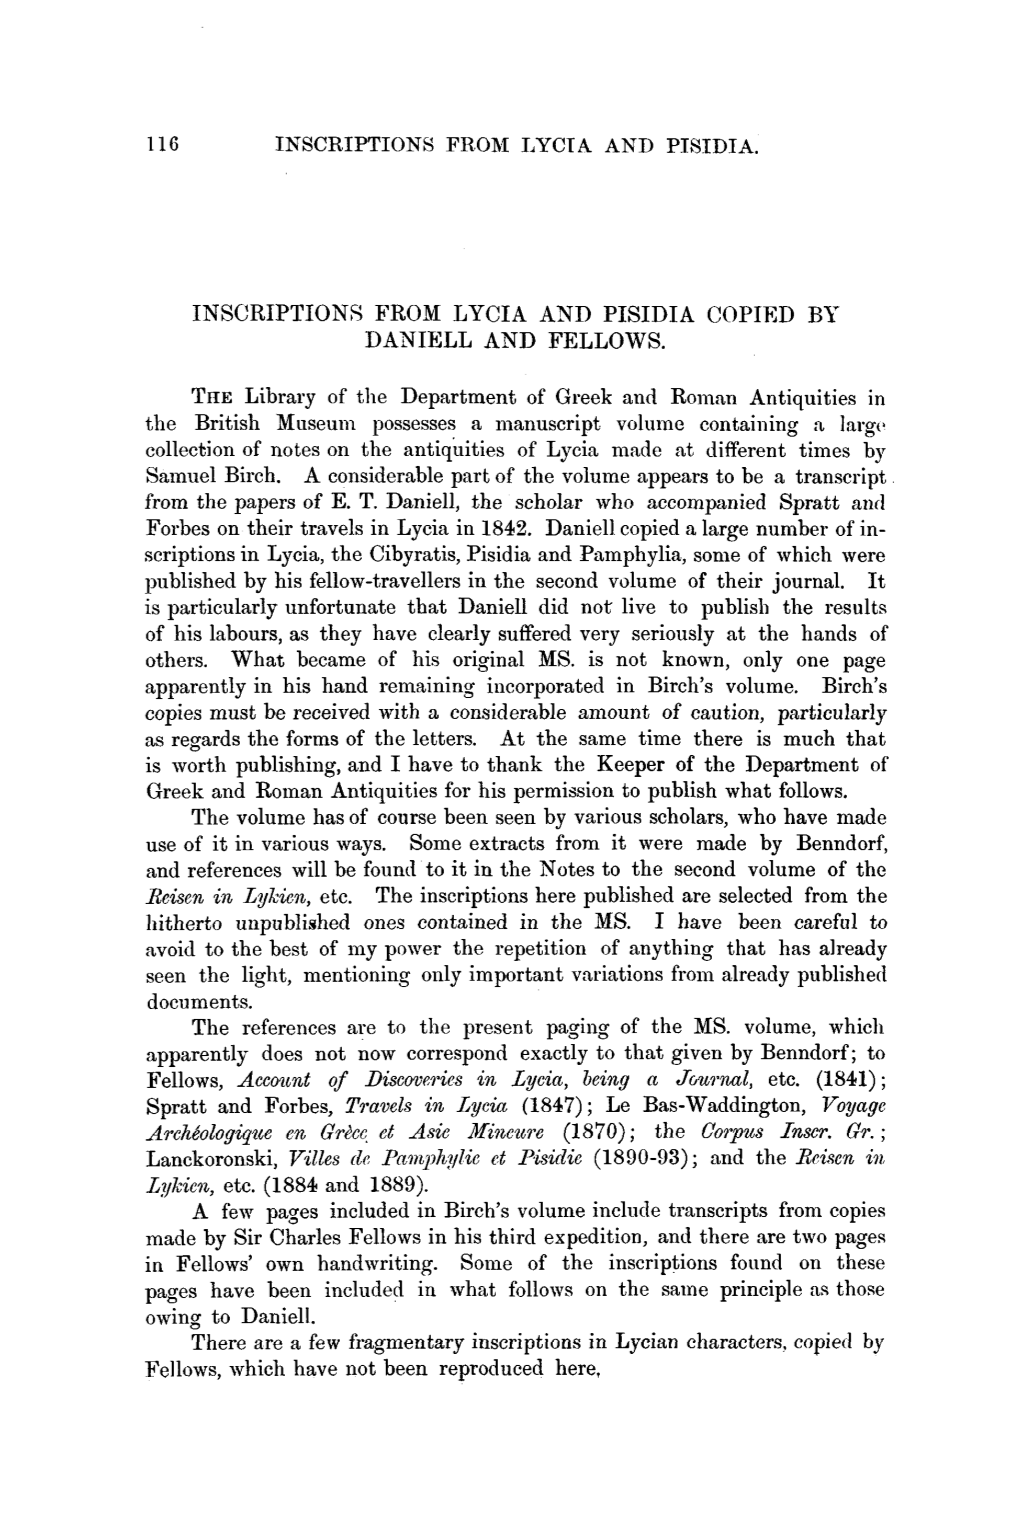 116 Inscriptions from Lycta and Pisidia. Inscriptions